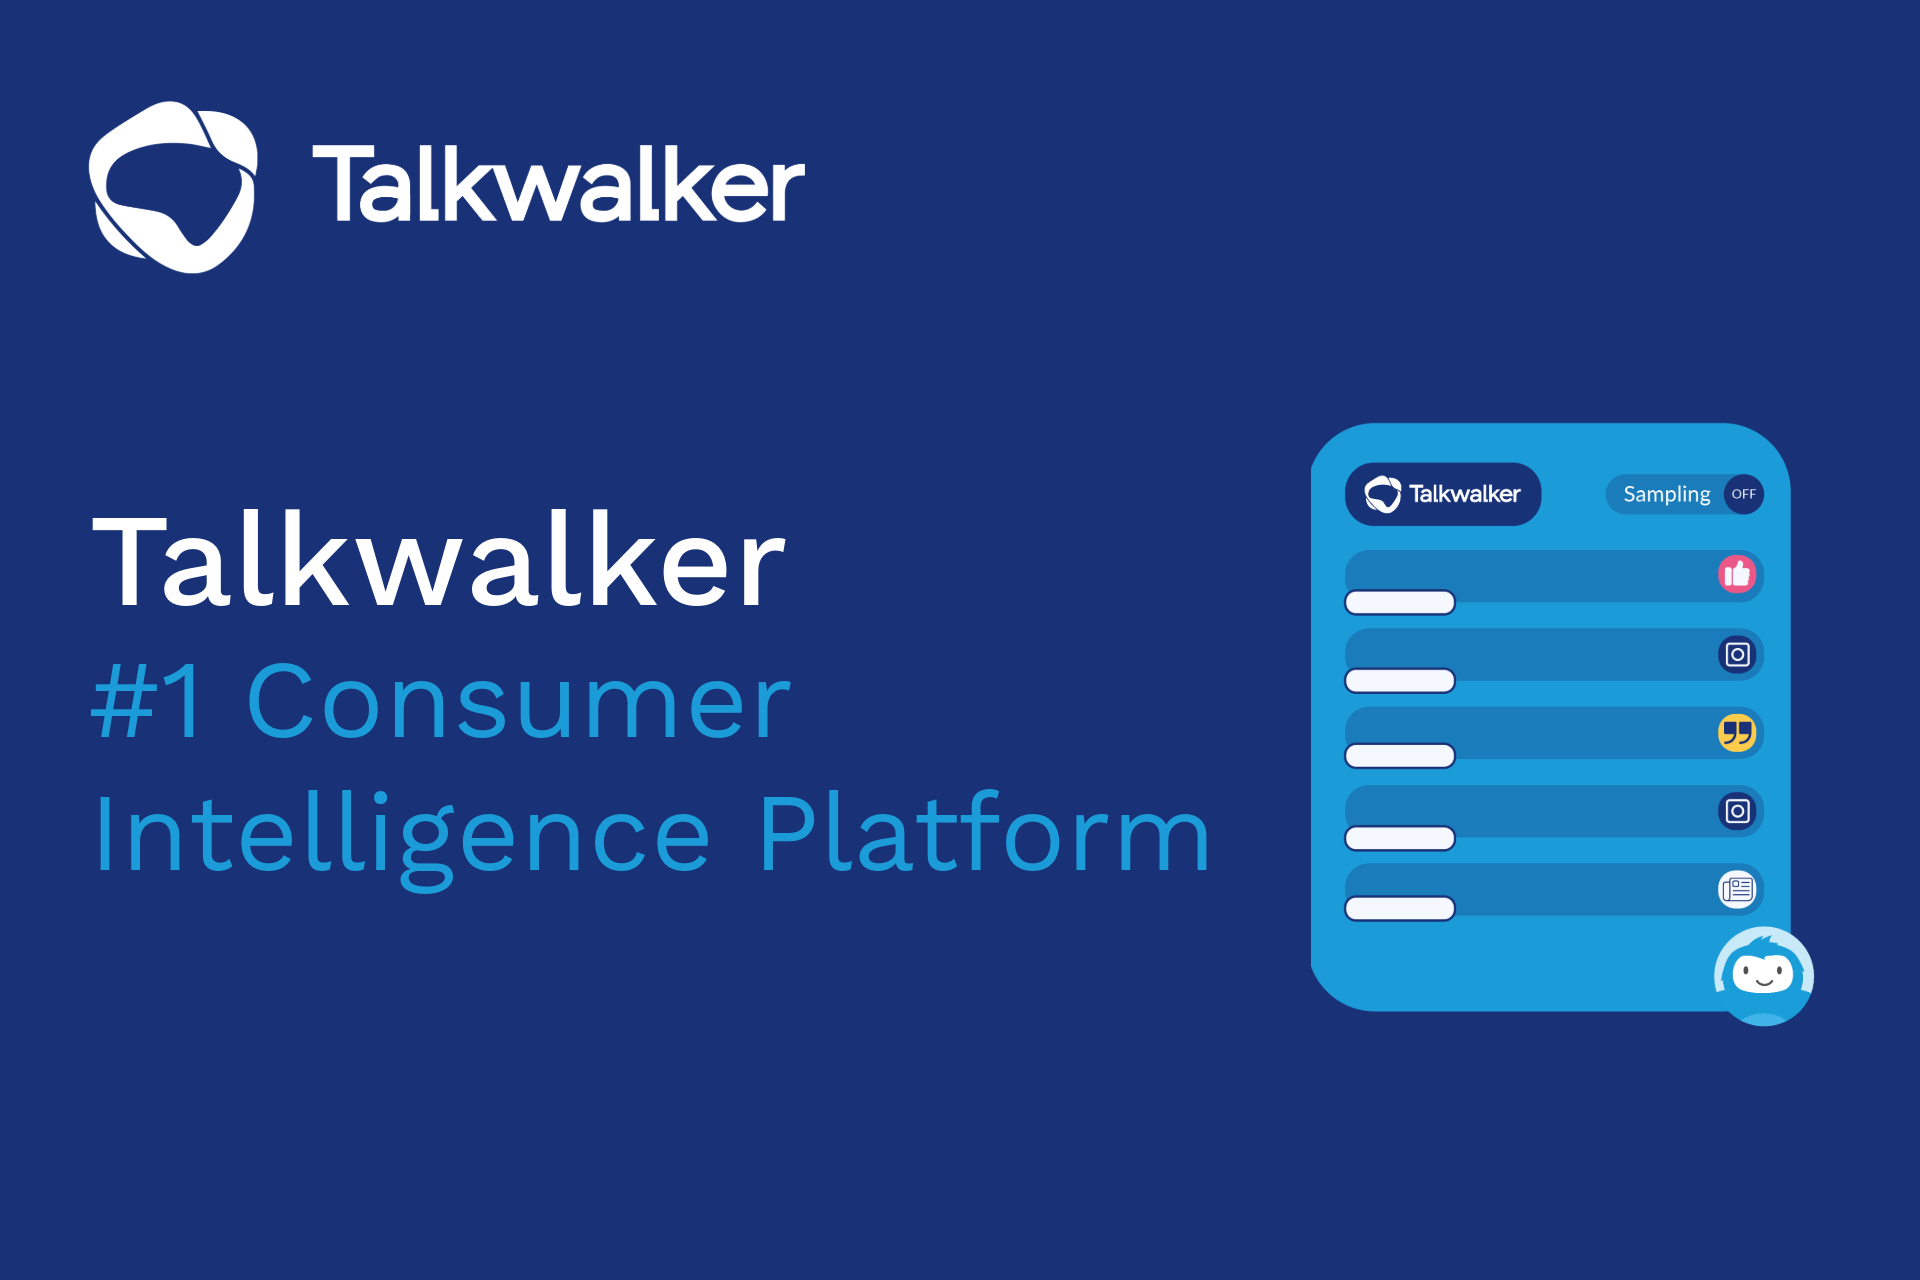 (c) Talkwalker.com